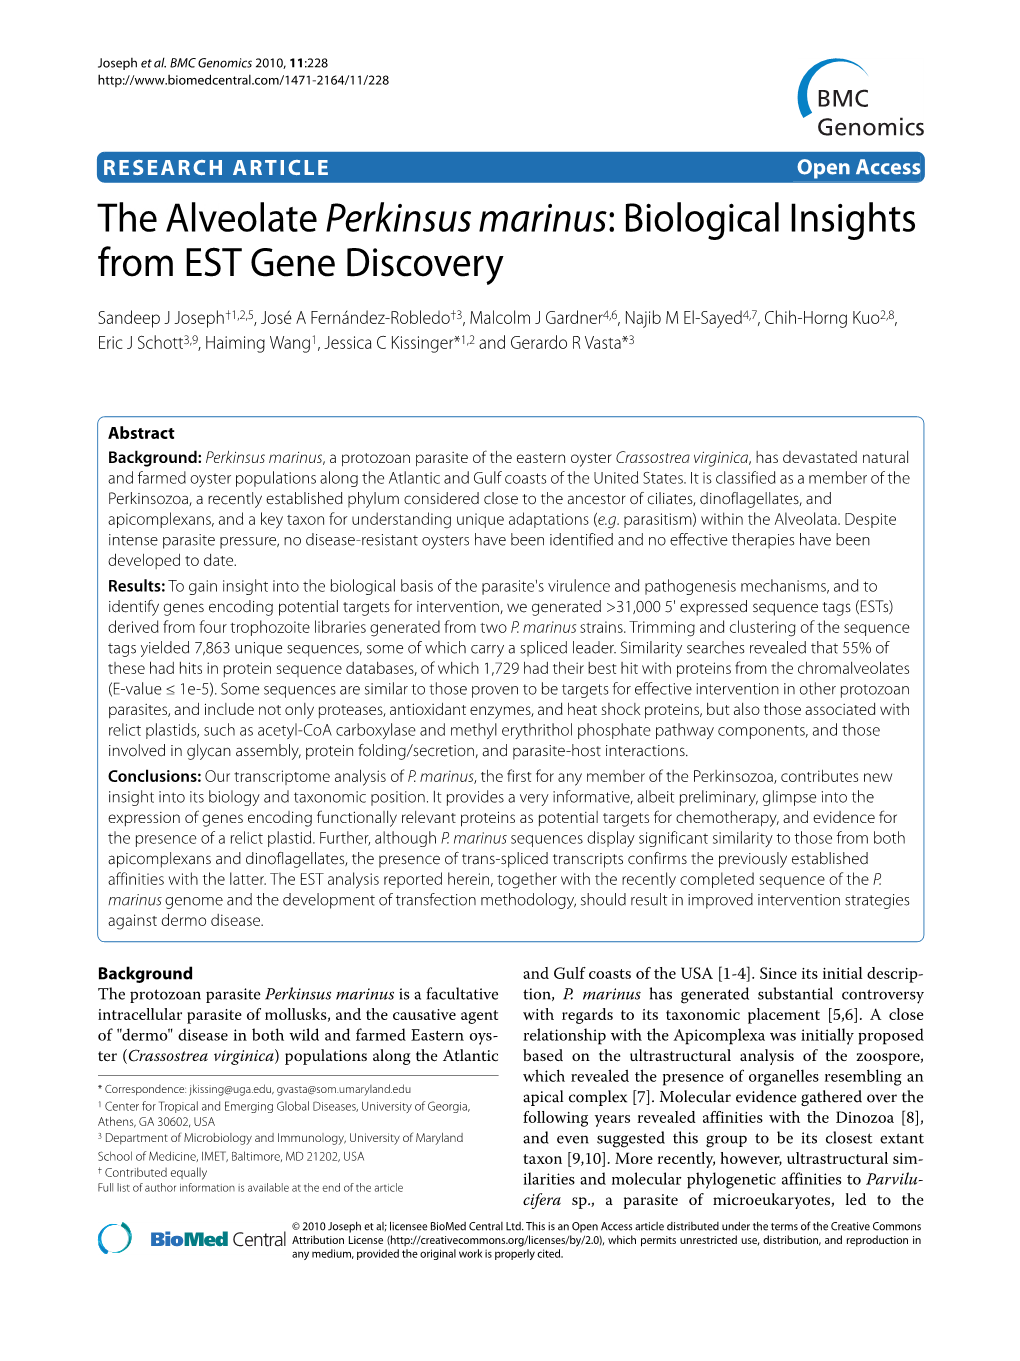 The Alveolate Perkinsus Marinus: Biological Insights from EST Gene Discovery BMC Genomics 2010, 11:228